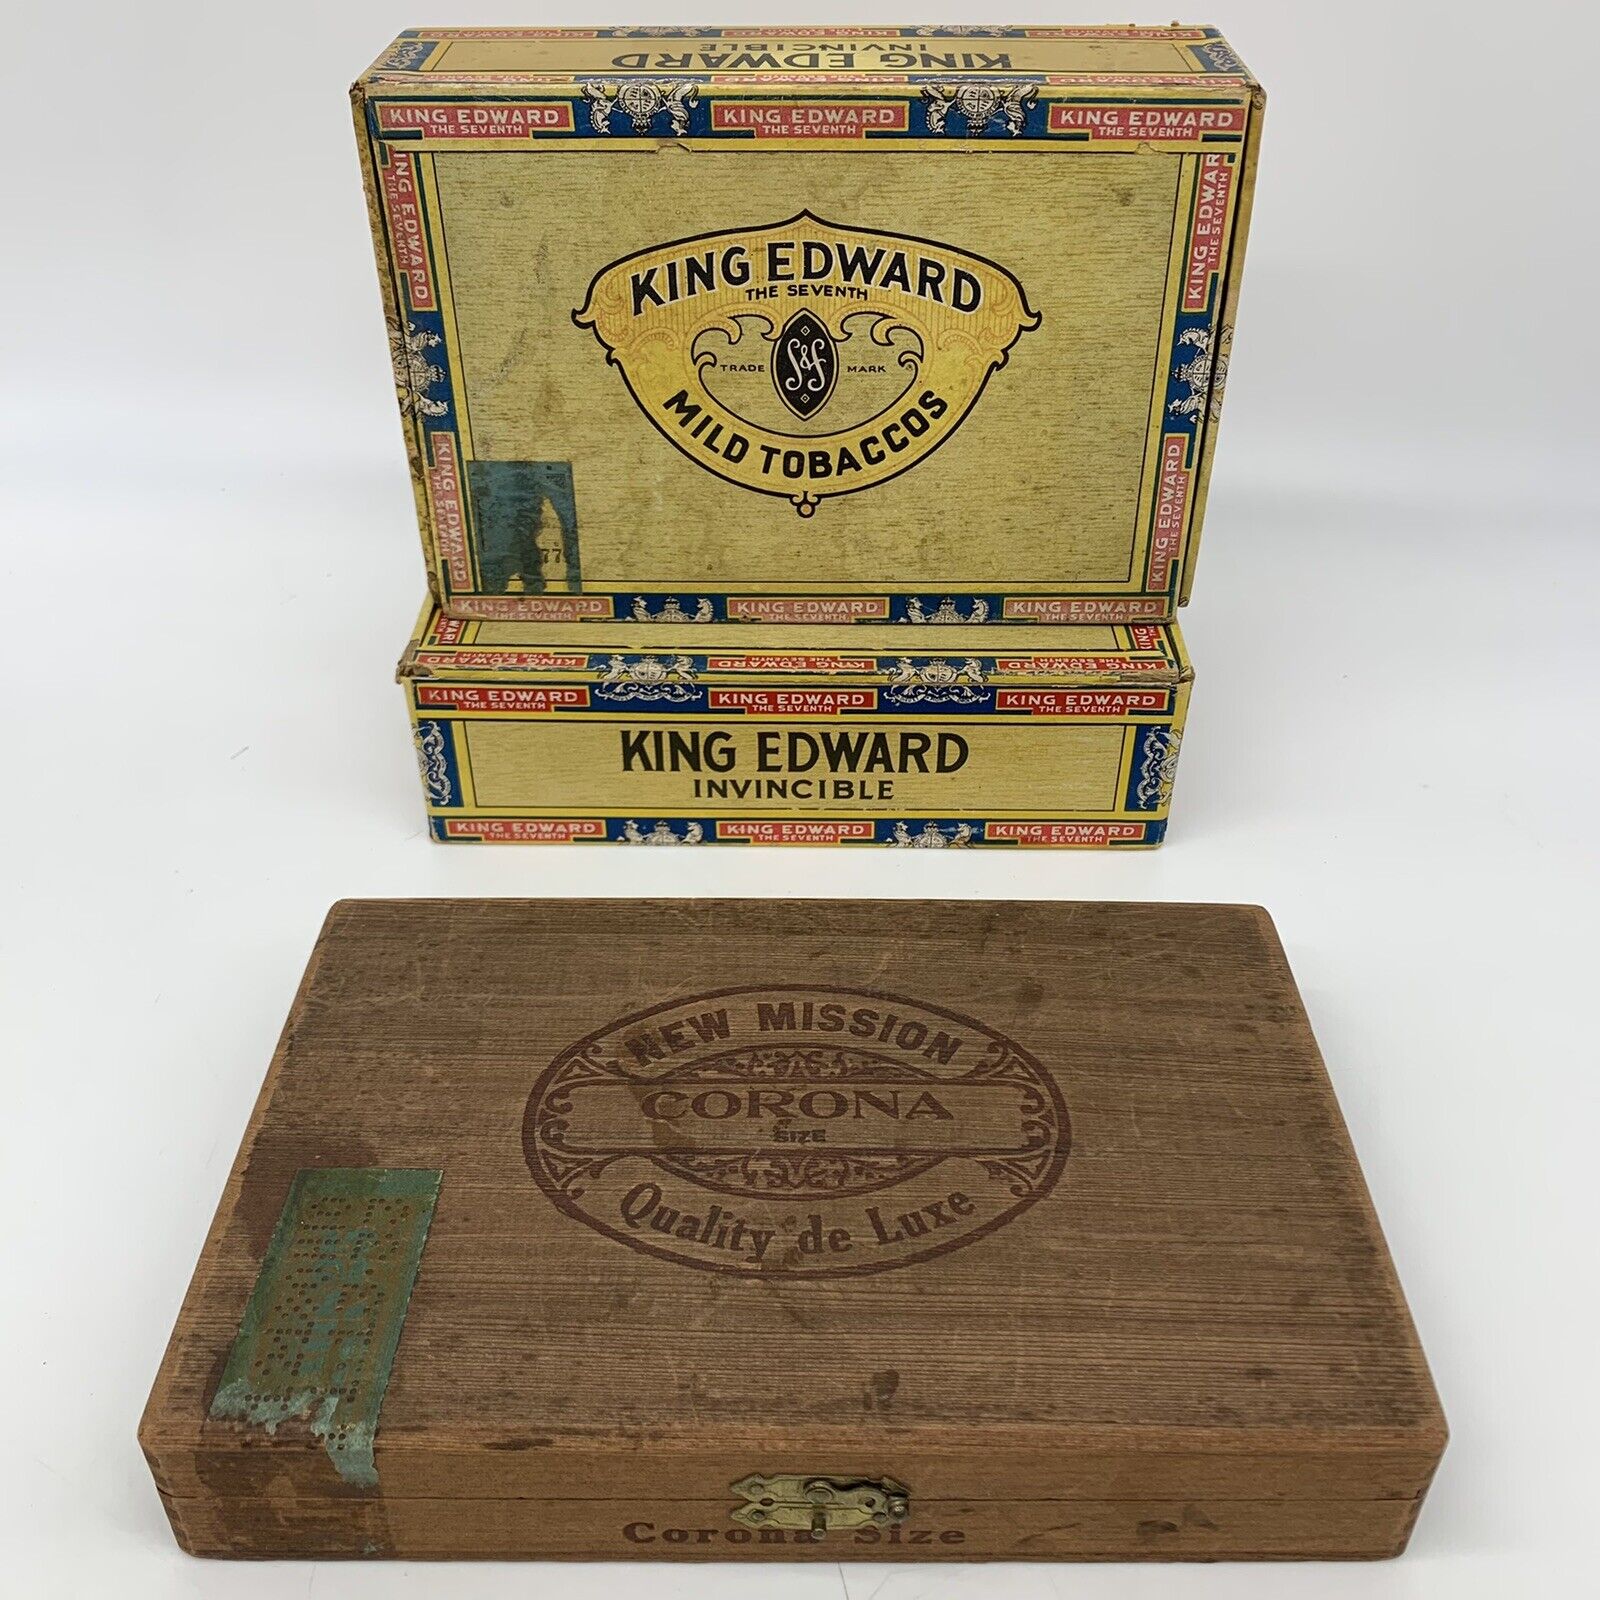 VTG 1920's Cigar Boxes Lot of 3 - King Edward Invincible & Corona Size